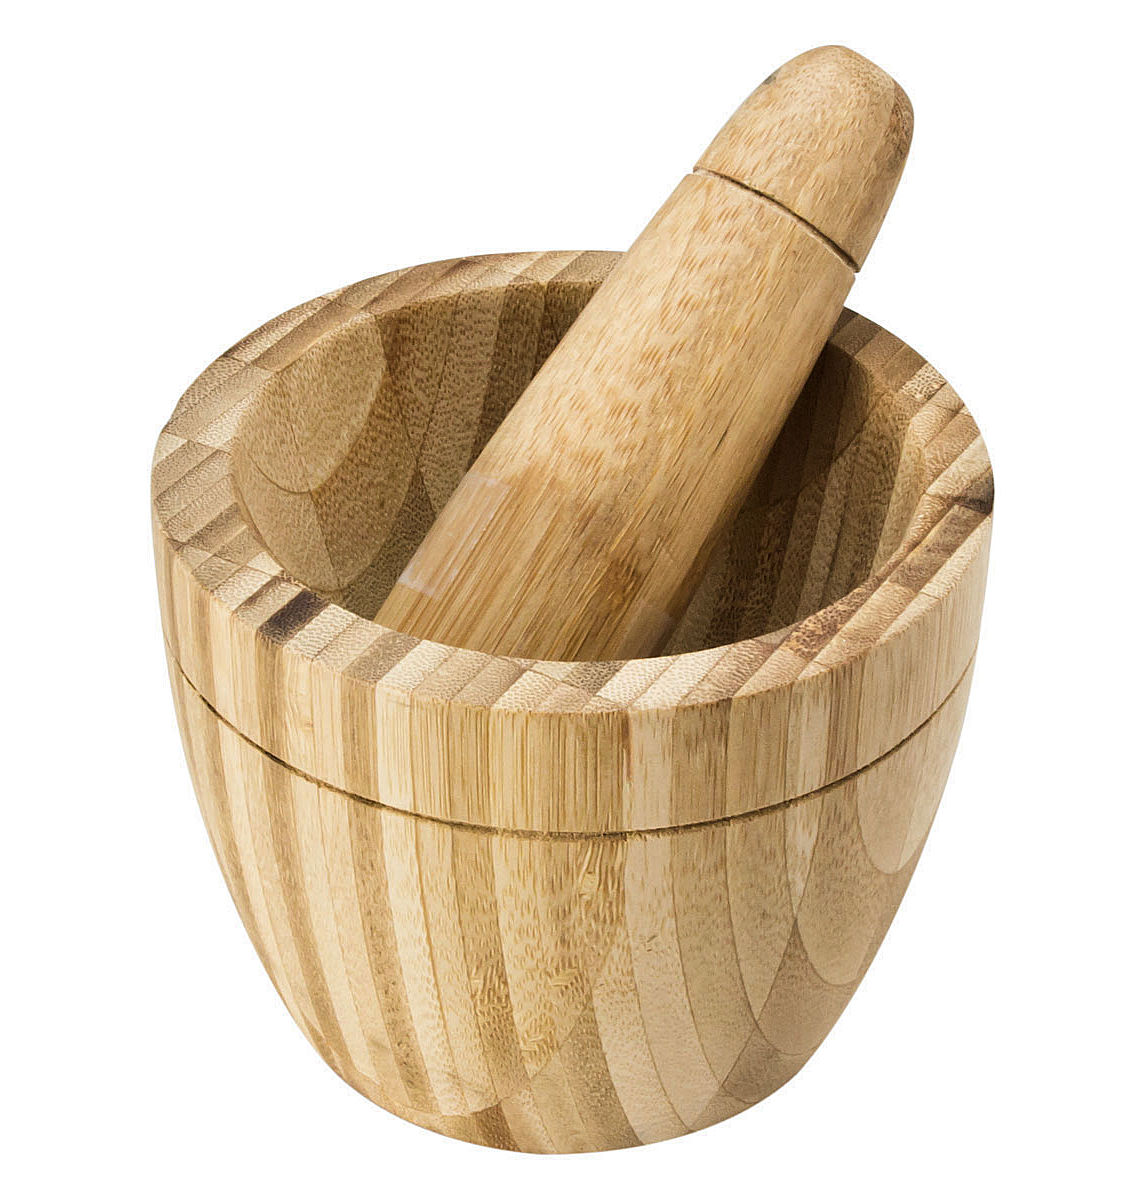 Bambus Mörser + Stößel - 11,5x10cm - Holz Küchenmörser Zerkleinerer Gewürzmörser